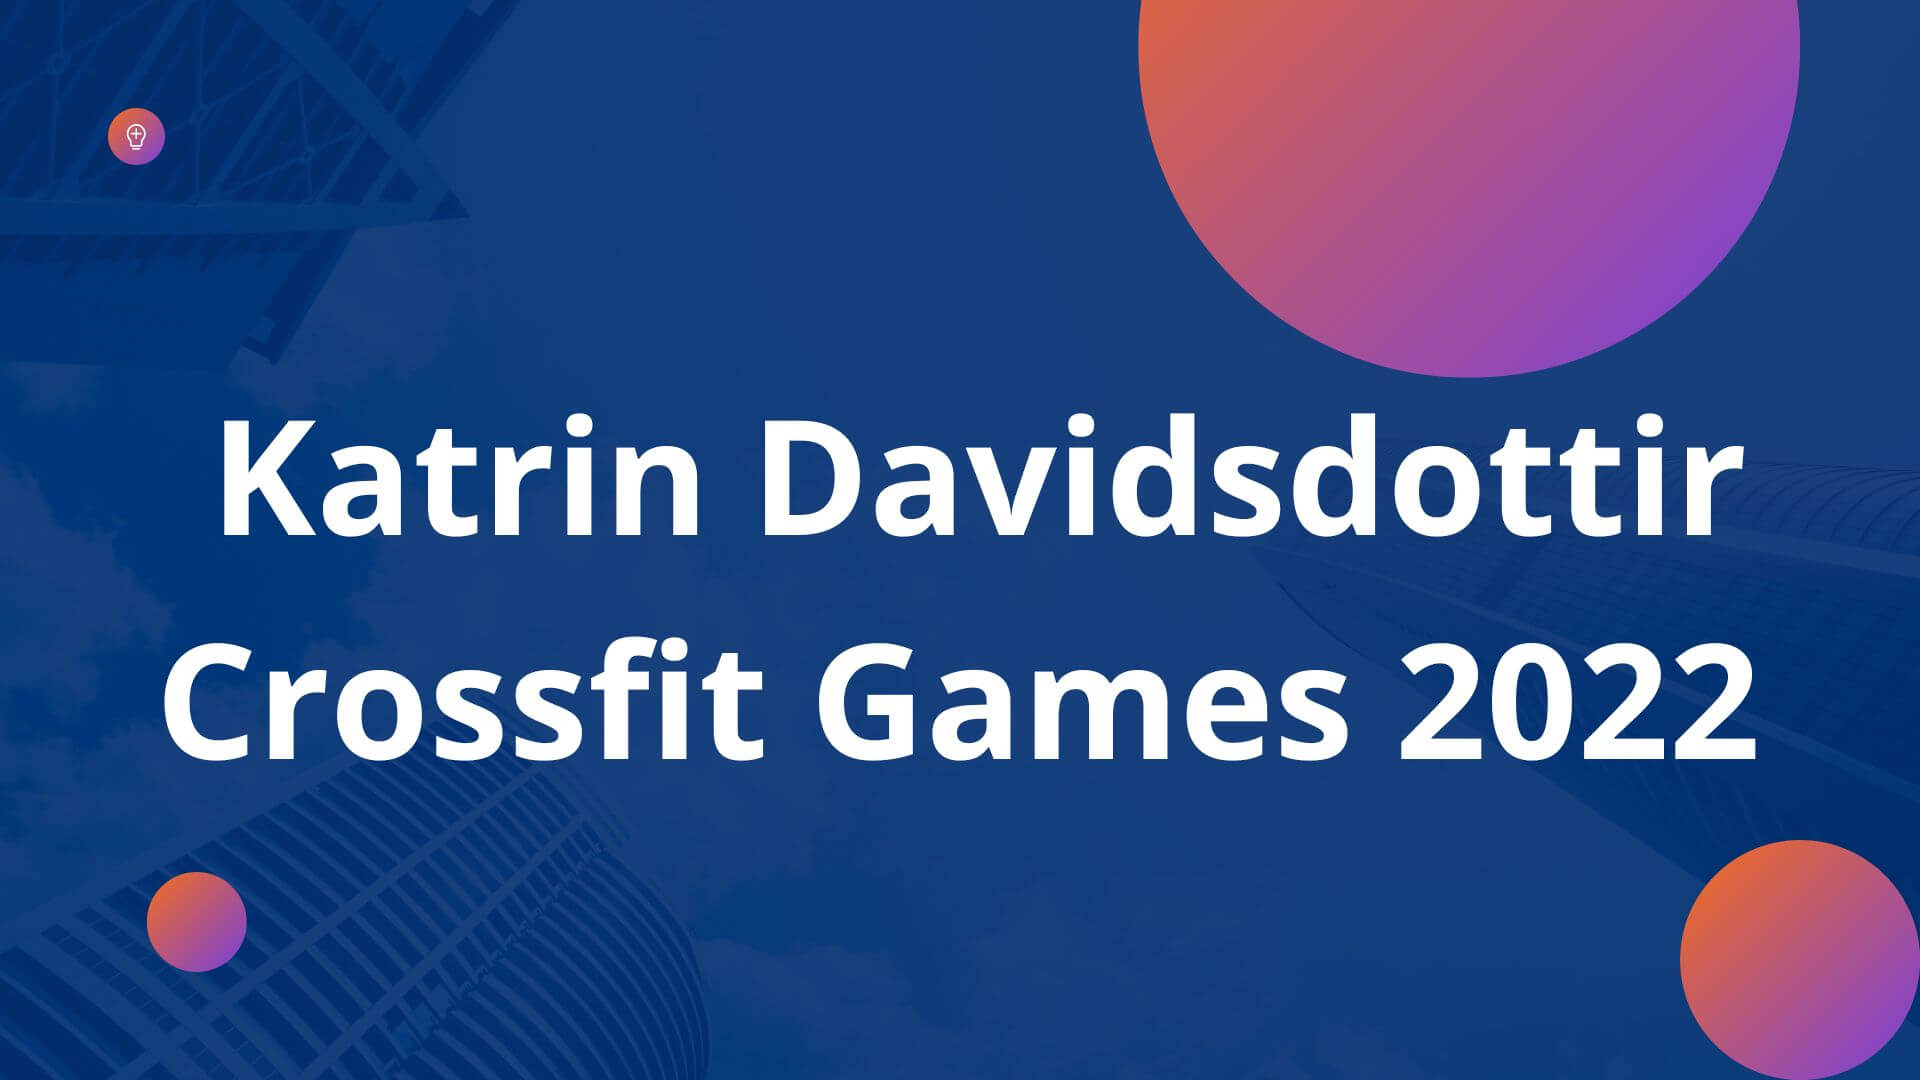 Katrin Davidsdottir Crossfit Games 2022 (August 2022) Complete Details!